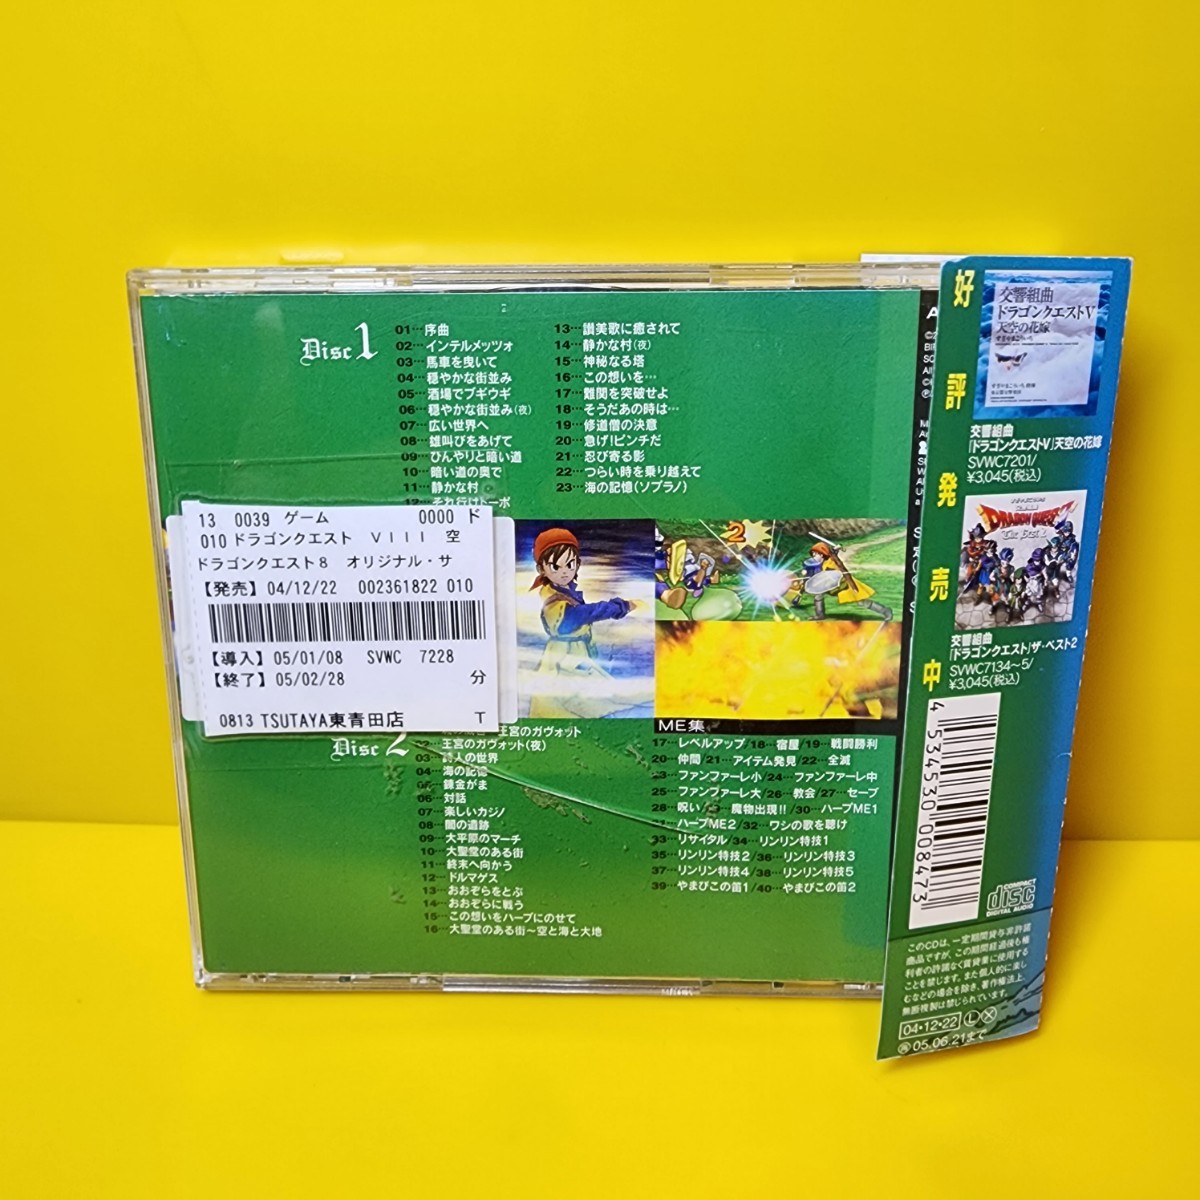 [[ Dragon Quest 8] empty . sea . large ground .. crack ... original * soundtrack /........]CD2 sheets set regular price : Y 2900